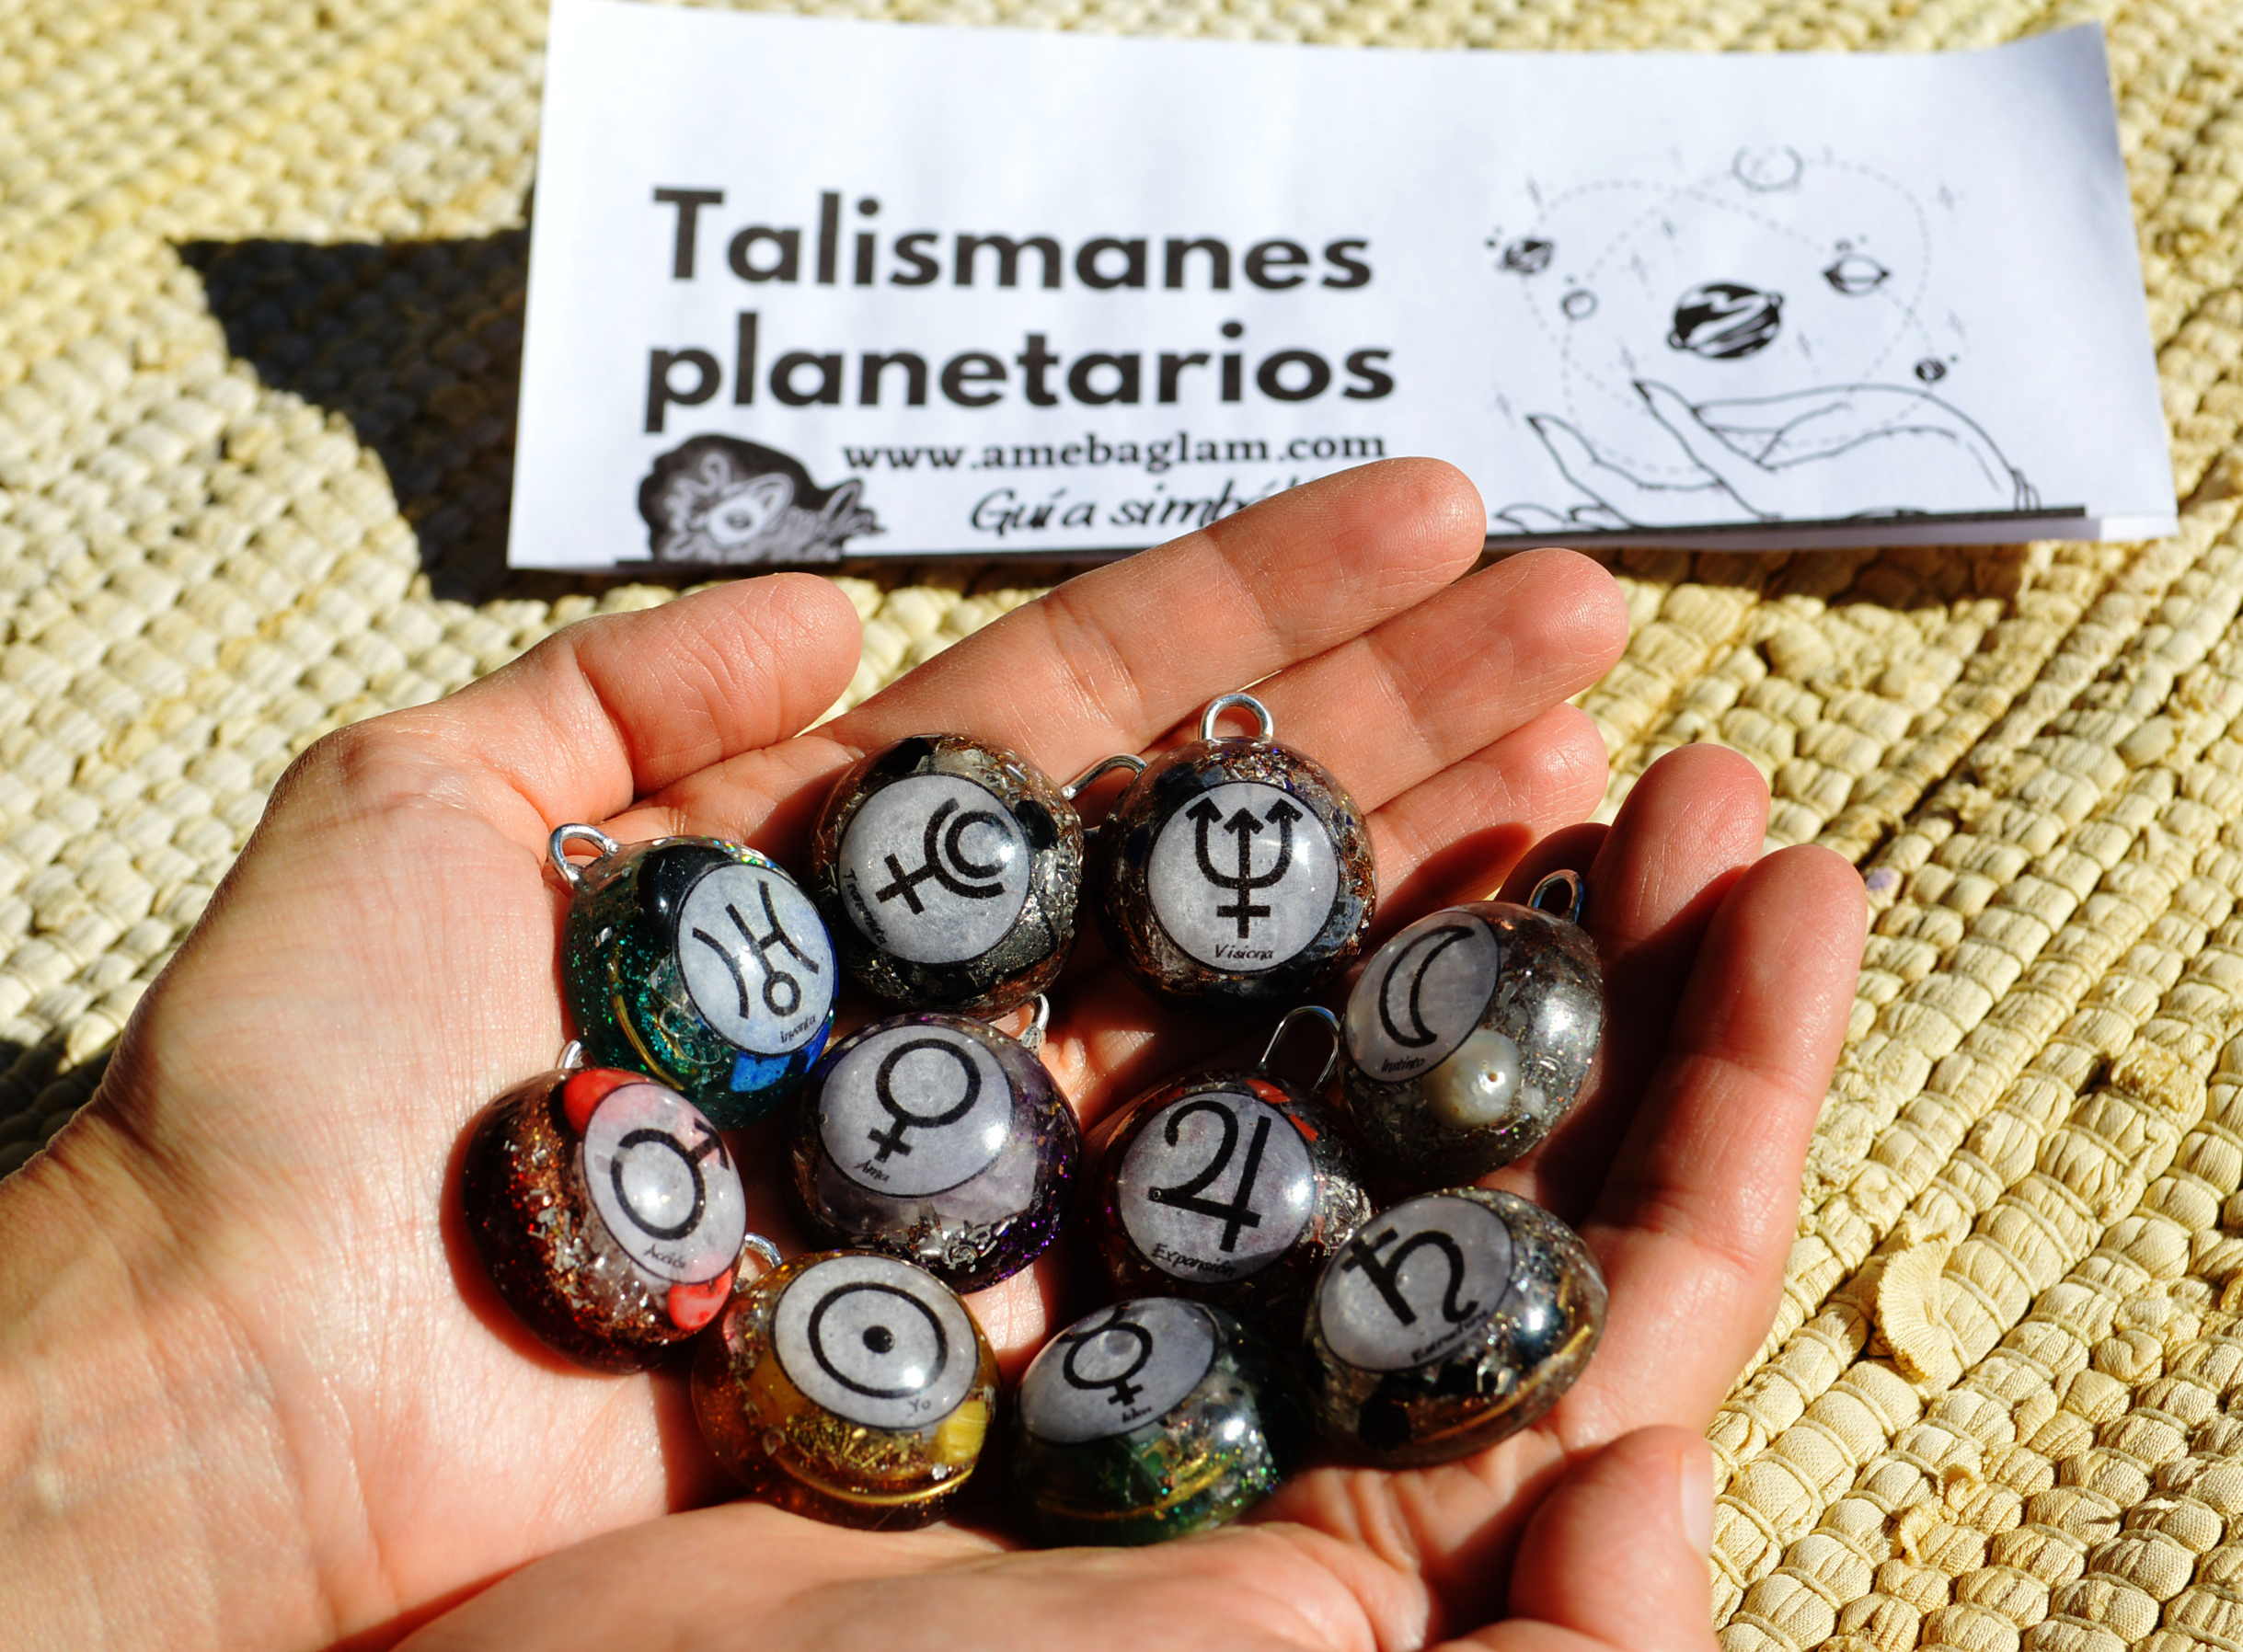 talismanes planetarios amebaglam